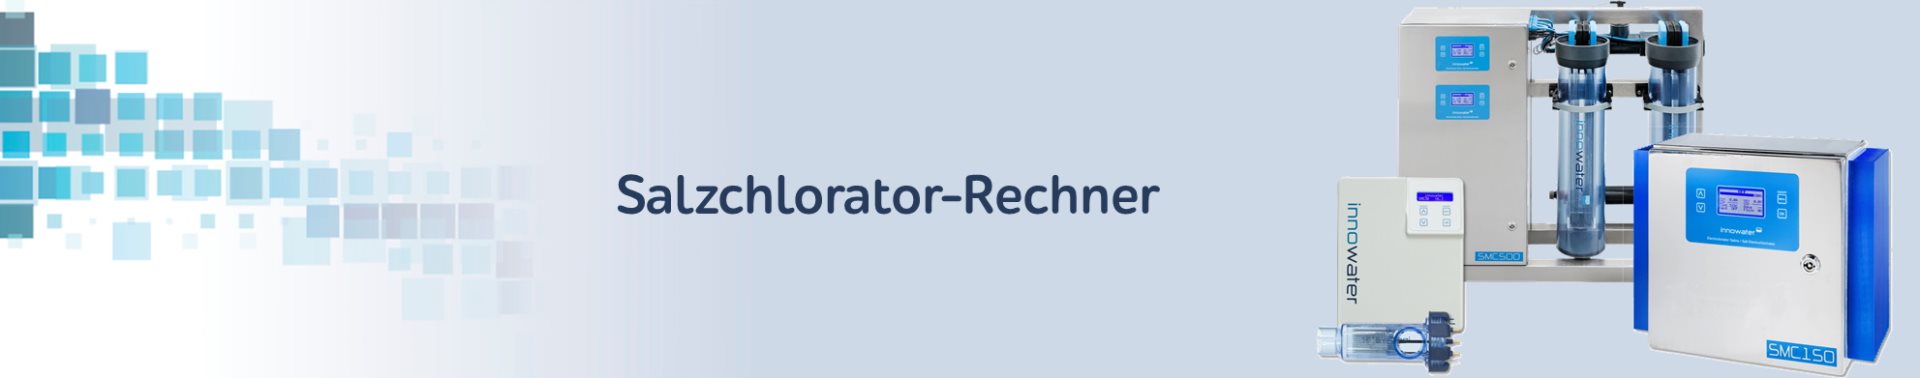 salzchlorator-rechner